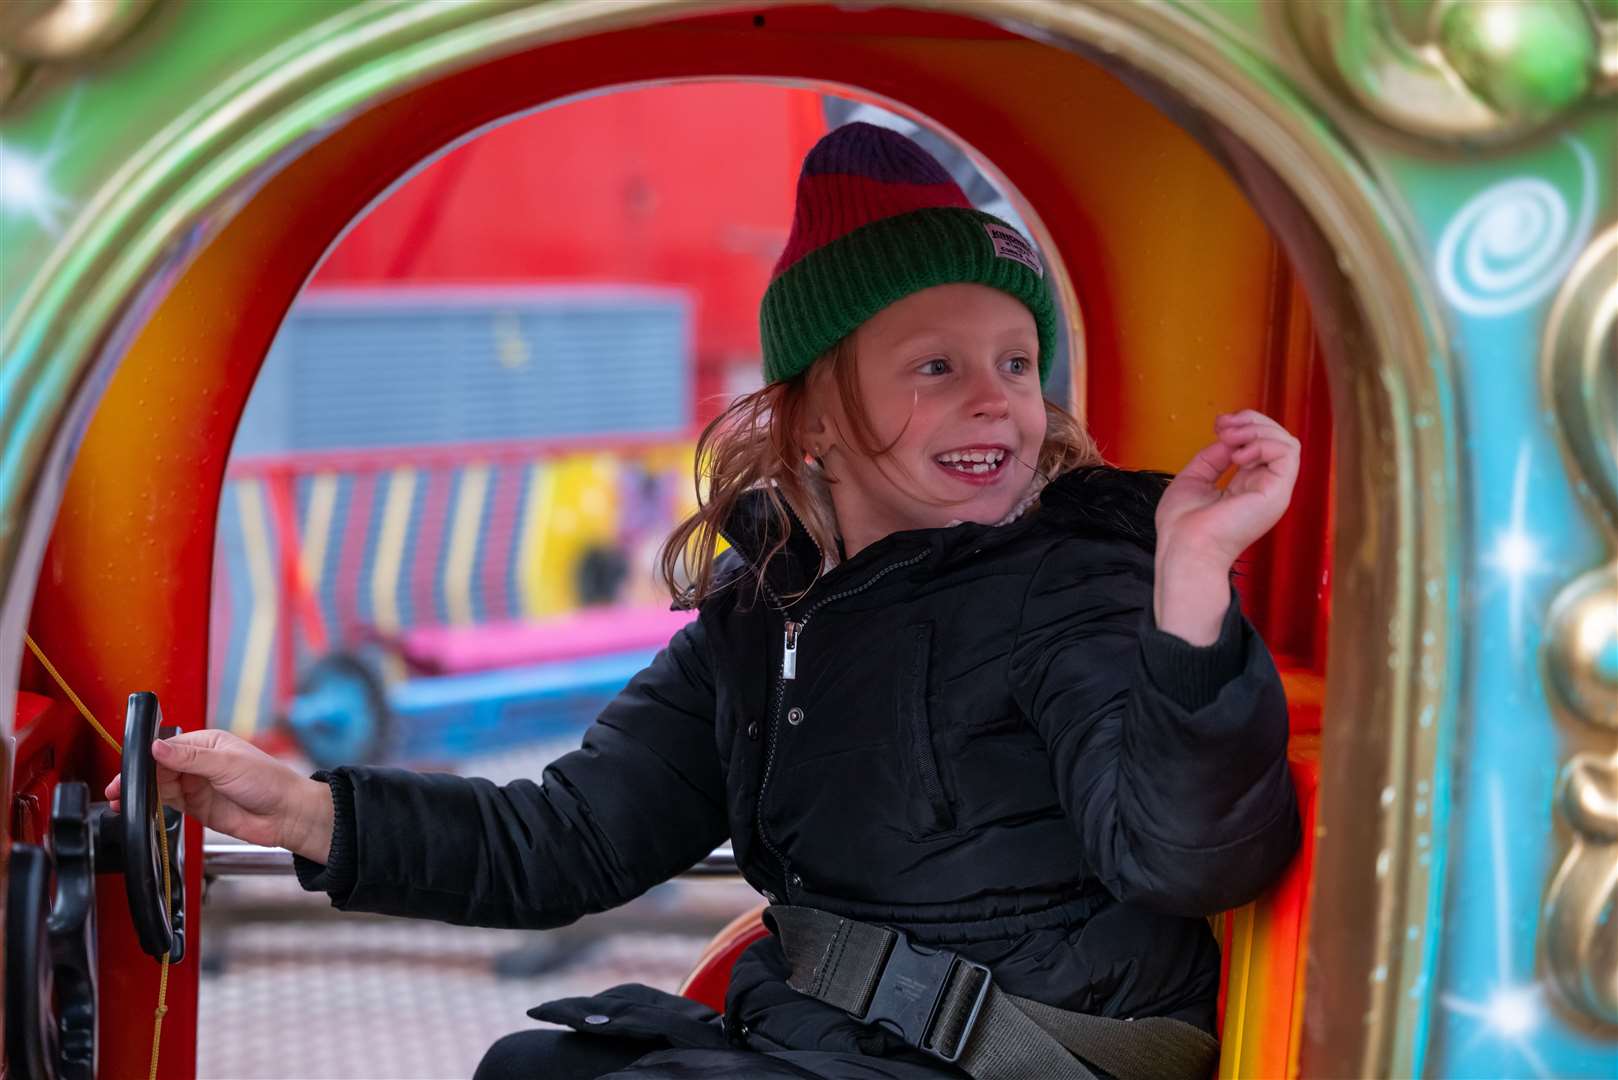 A child enjoying the fairground rides.